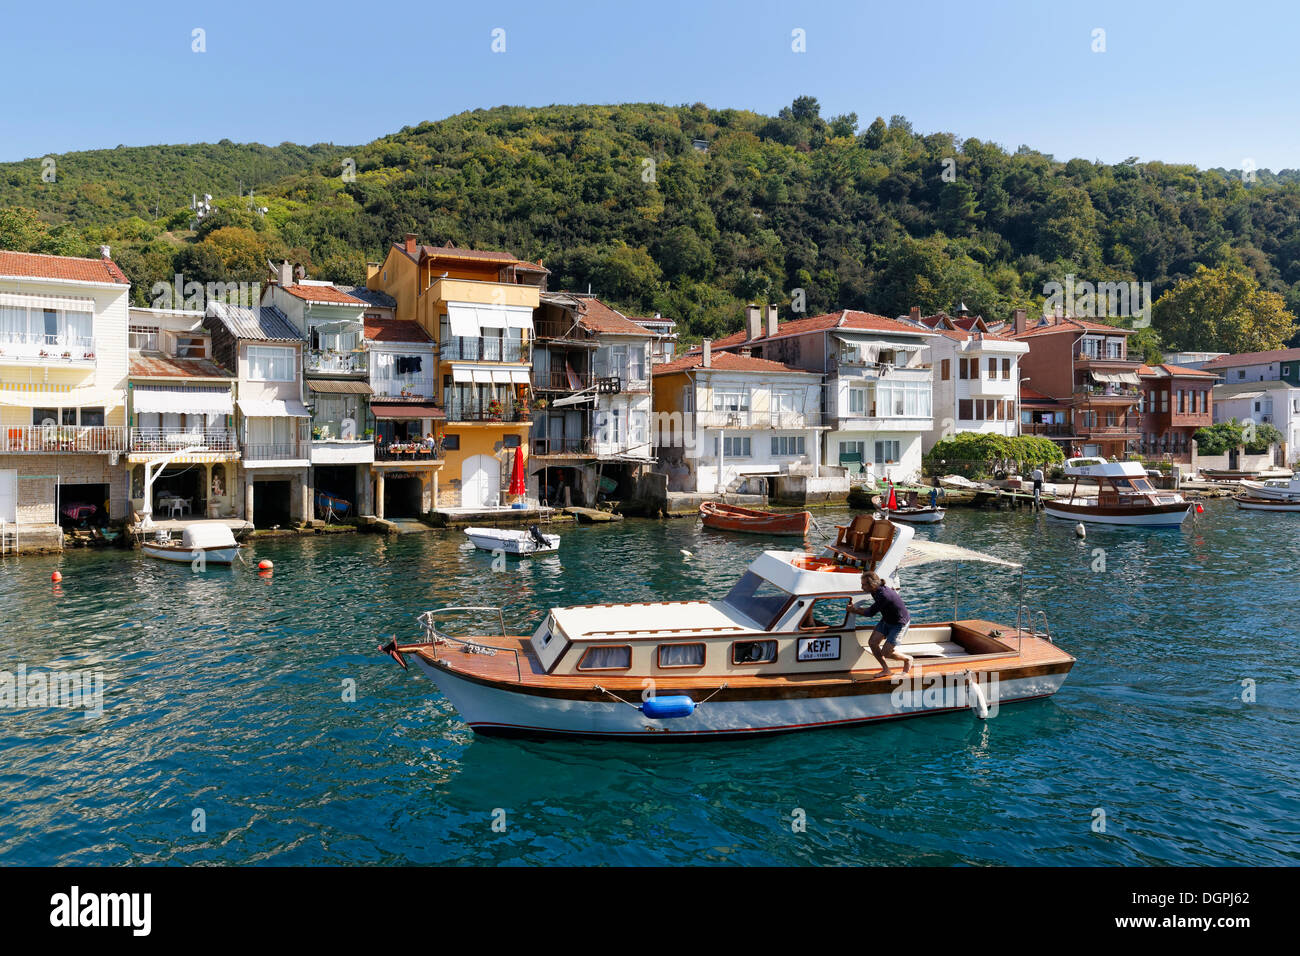 Houses with boat garages on the shore of the Bosphorus or Bosporus, Bosporus, Anadolu Kavagi, Istanbul, Asian side Stock Photo